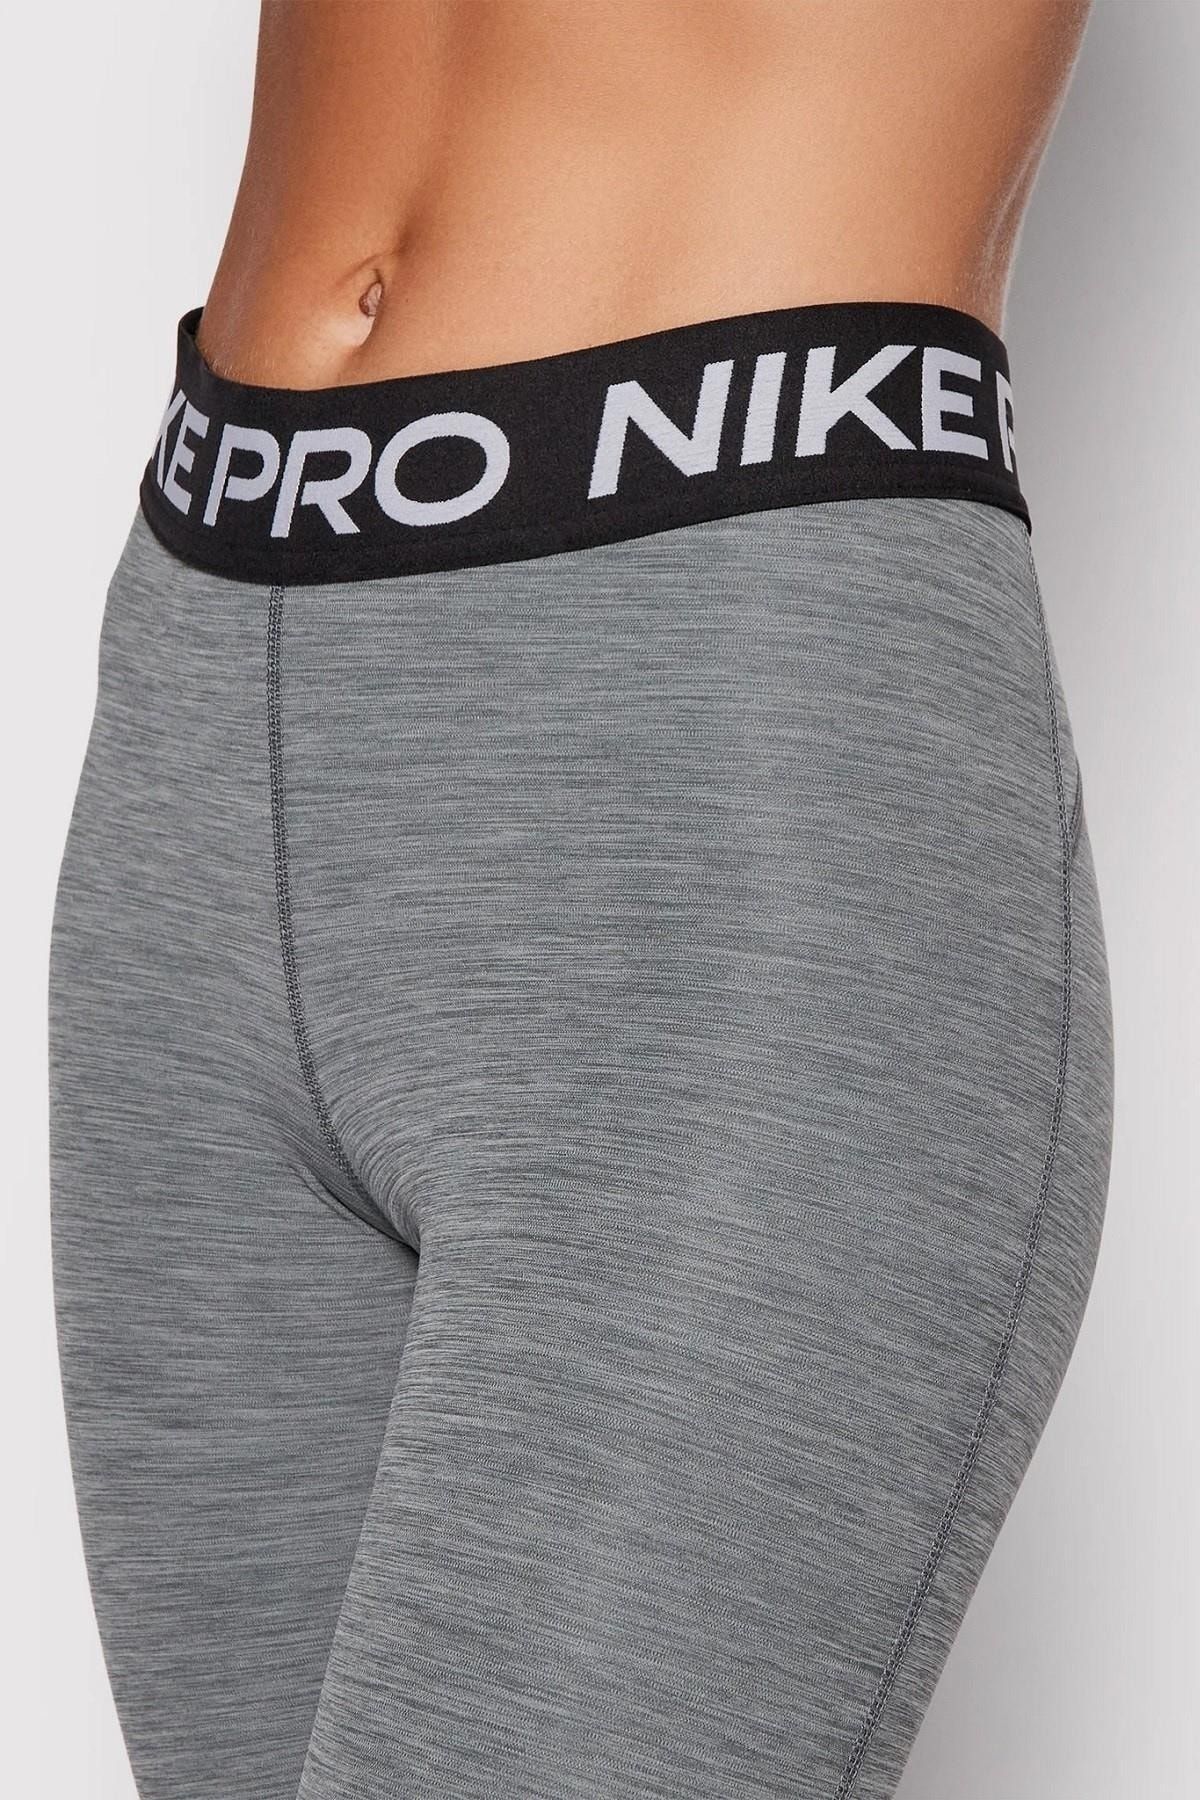 Grey nike-pro-leggings - Depop